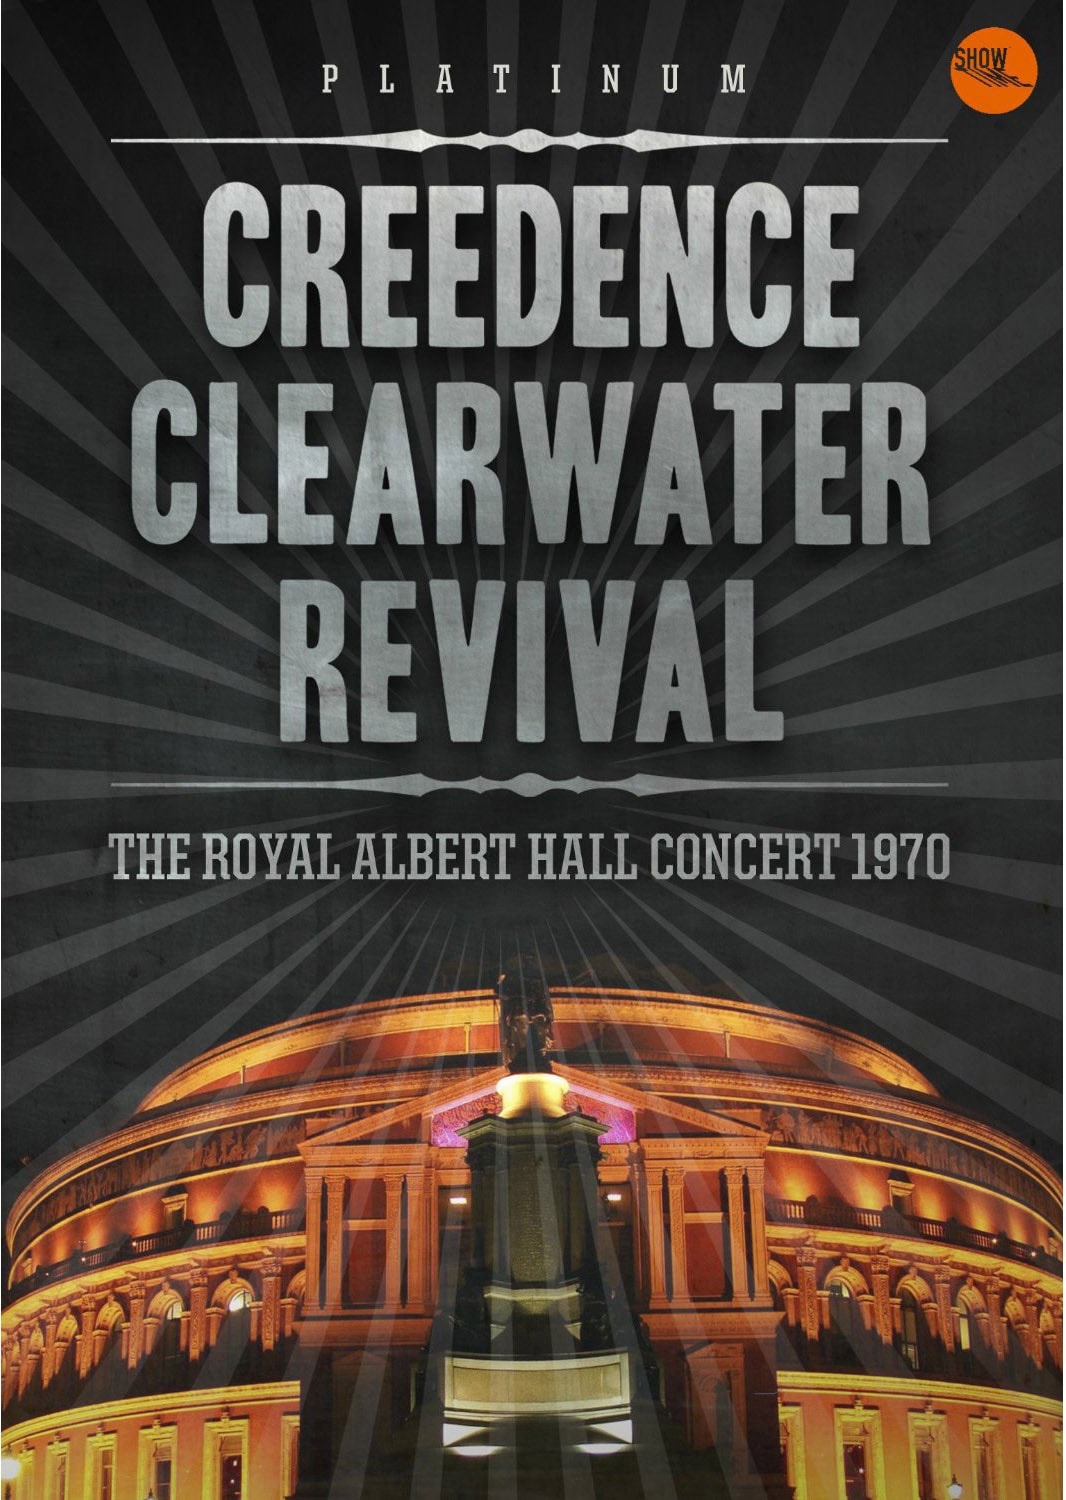   Revival   The Royal Albert Hall Concert 1970 (DVD)  